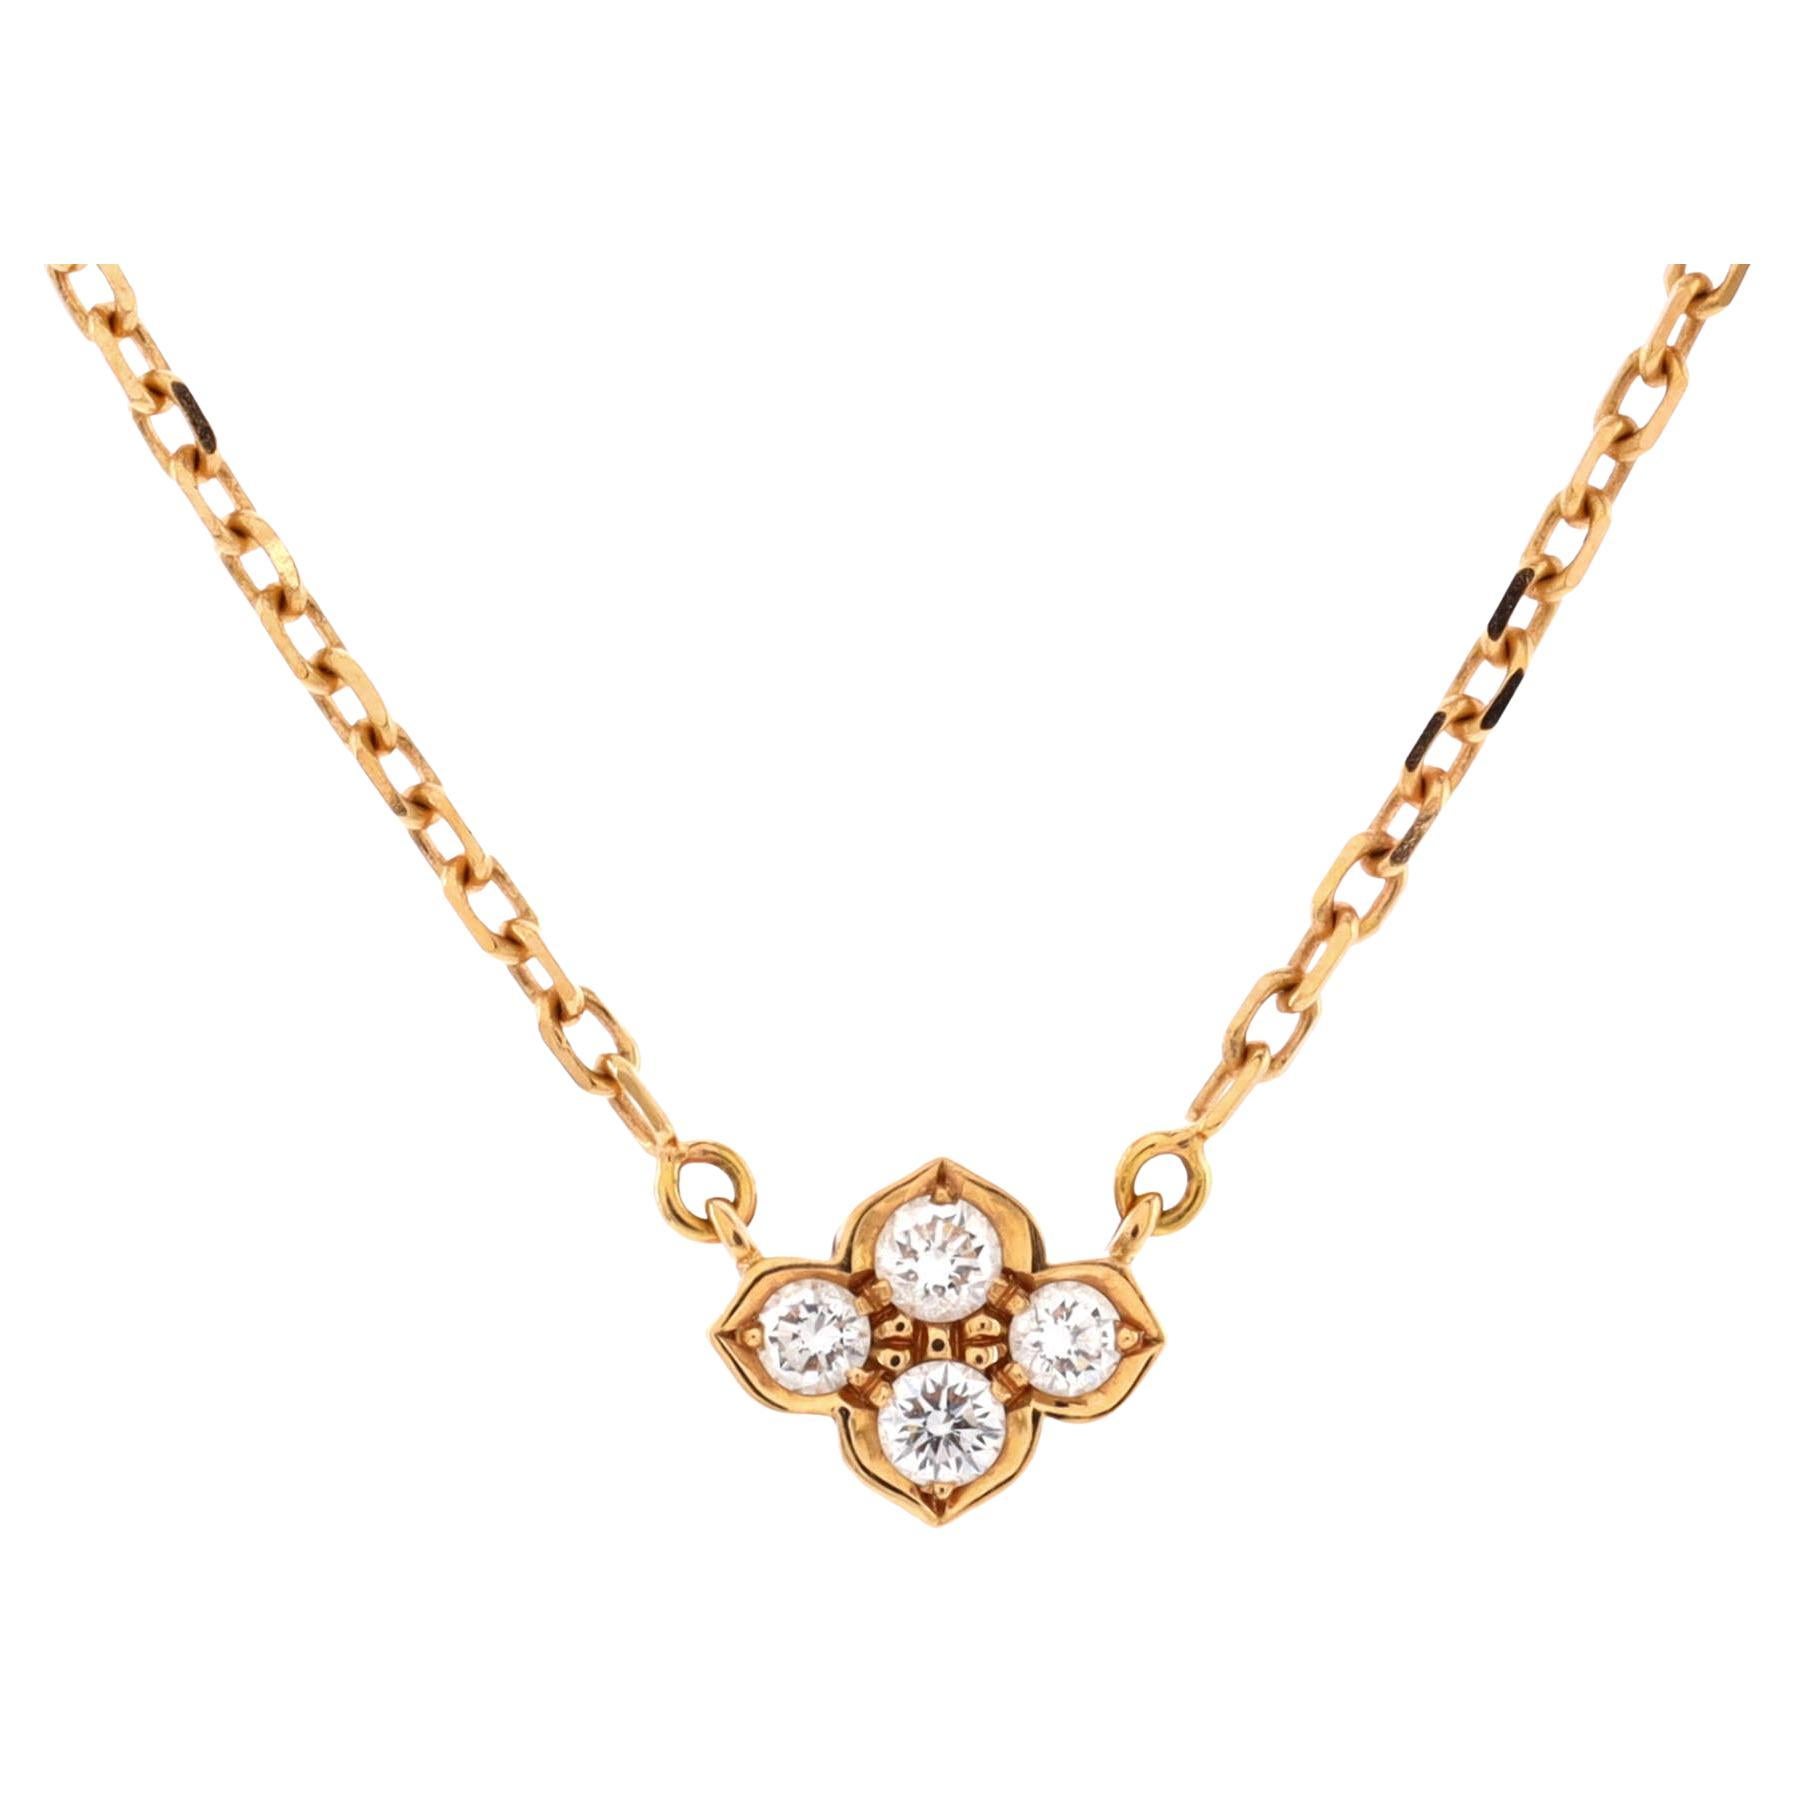 Cartier Hindu Pendant Necklace 18k Rose Gold and Diamonds